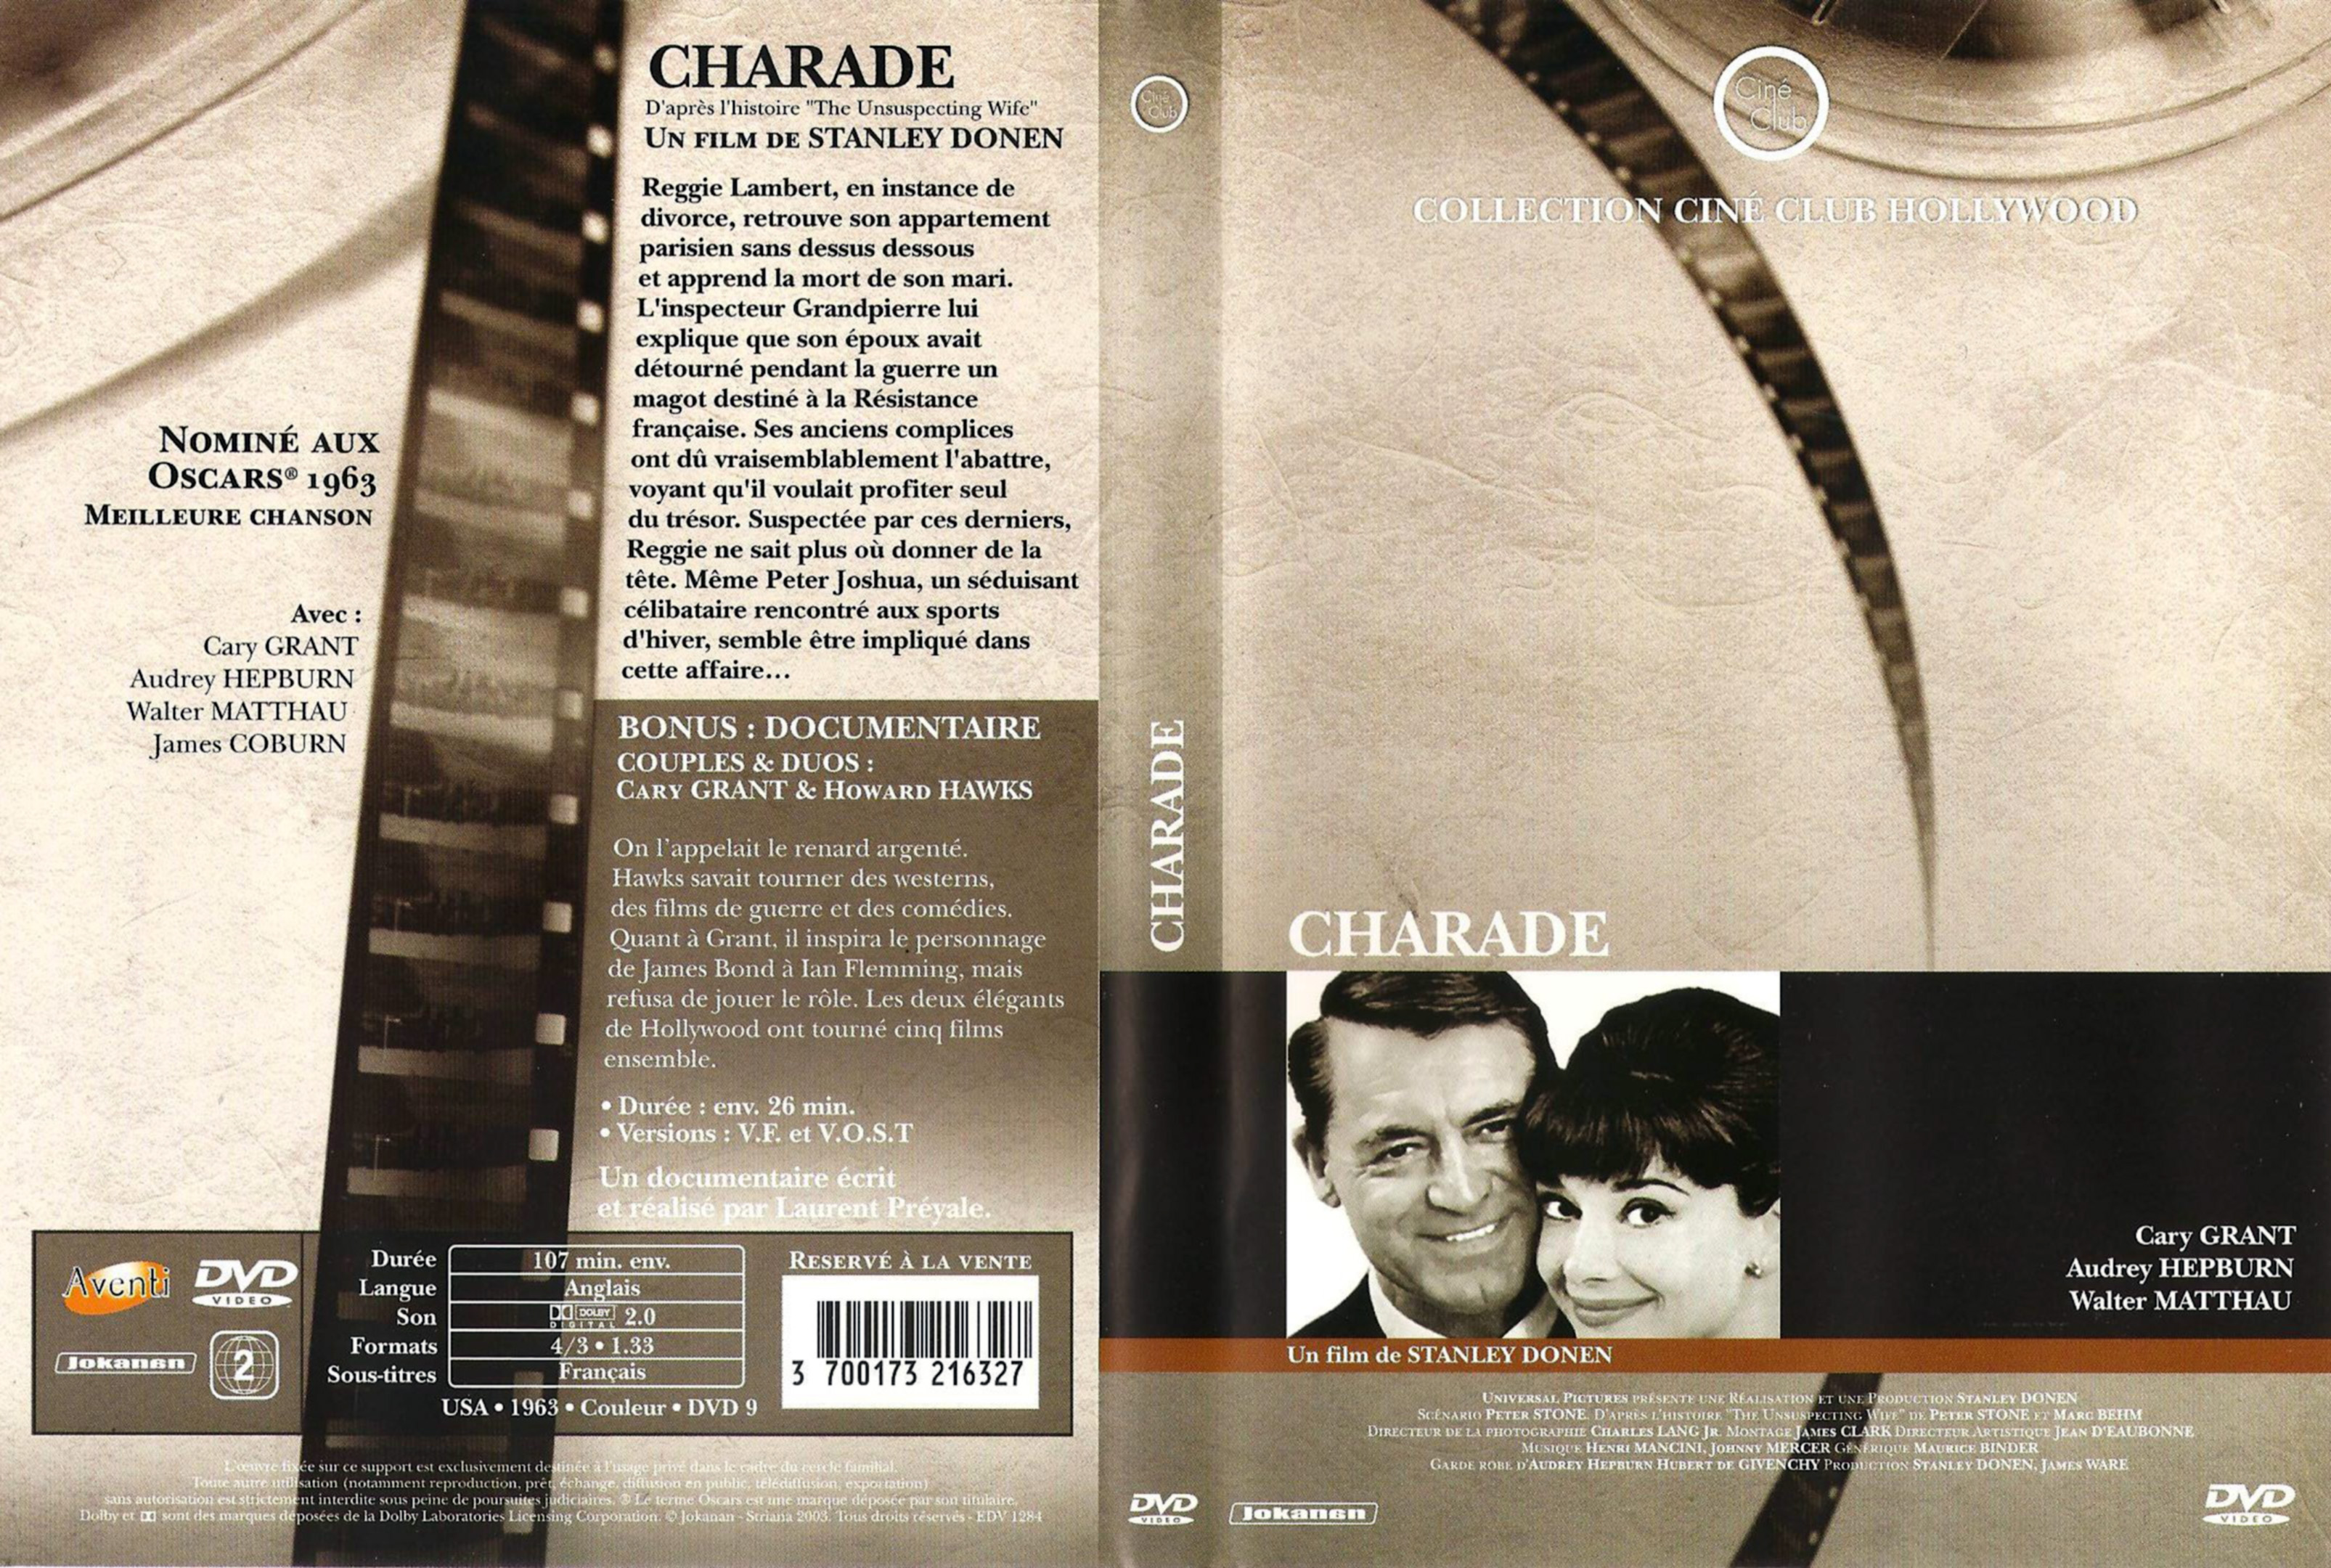 Jaquette DVD Charade v3